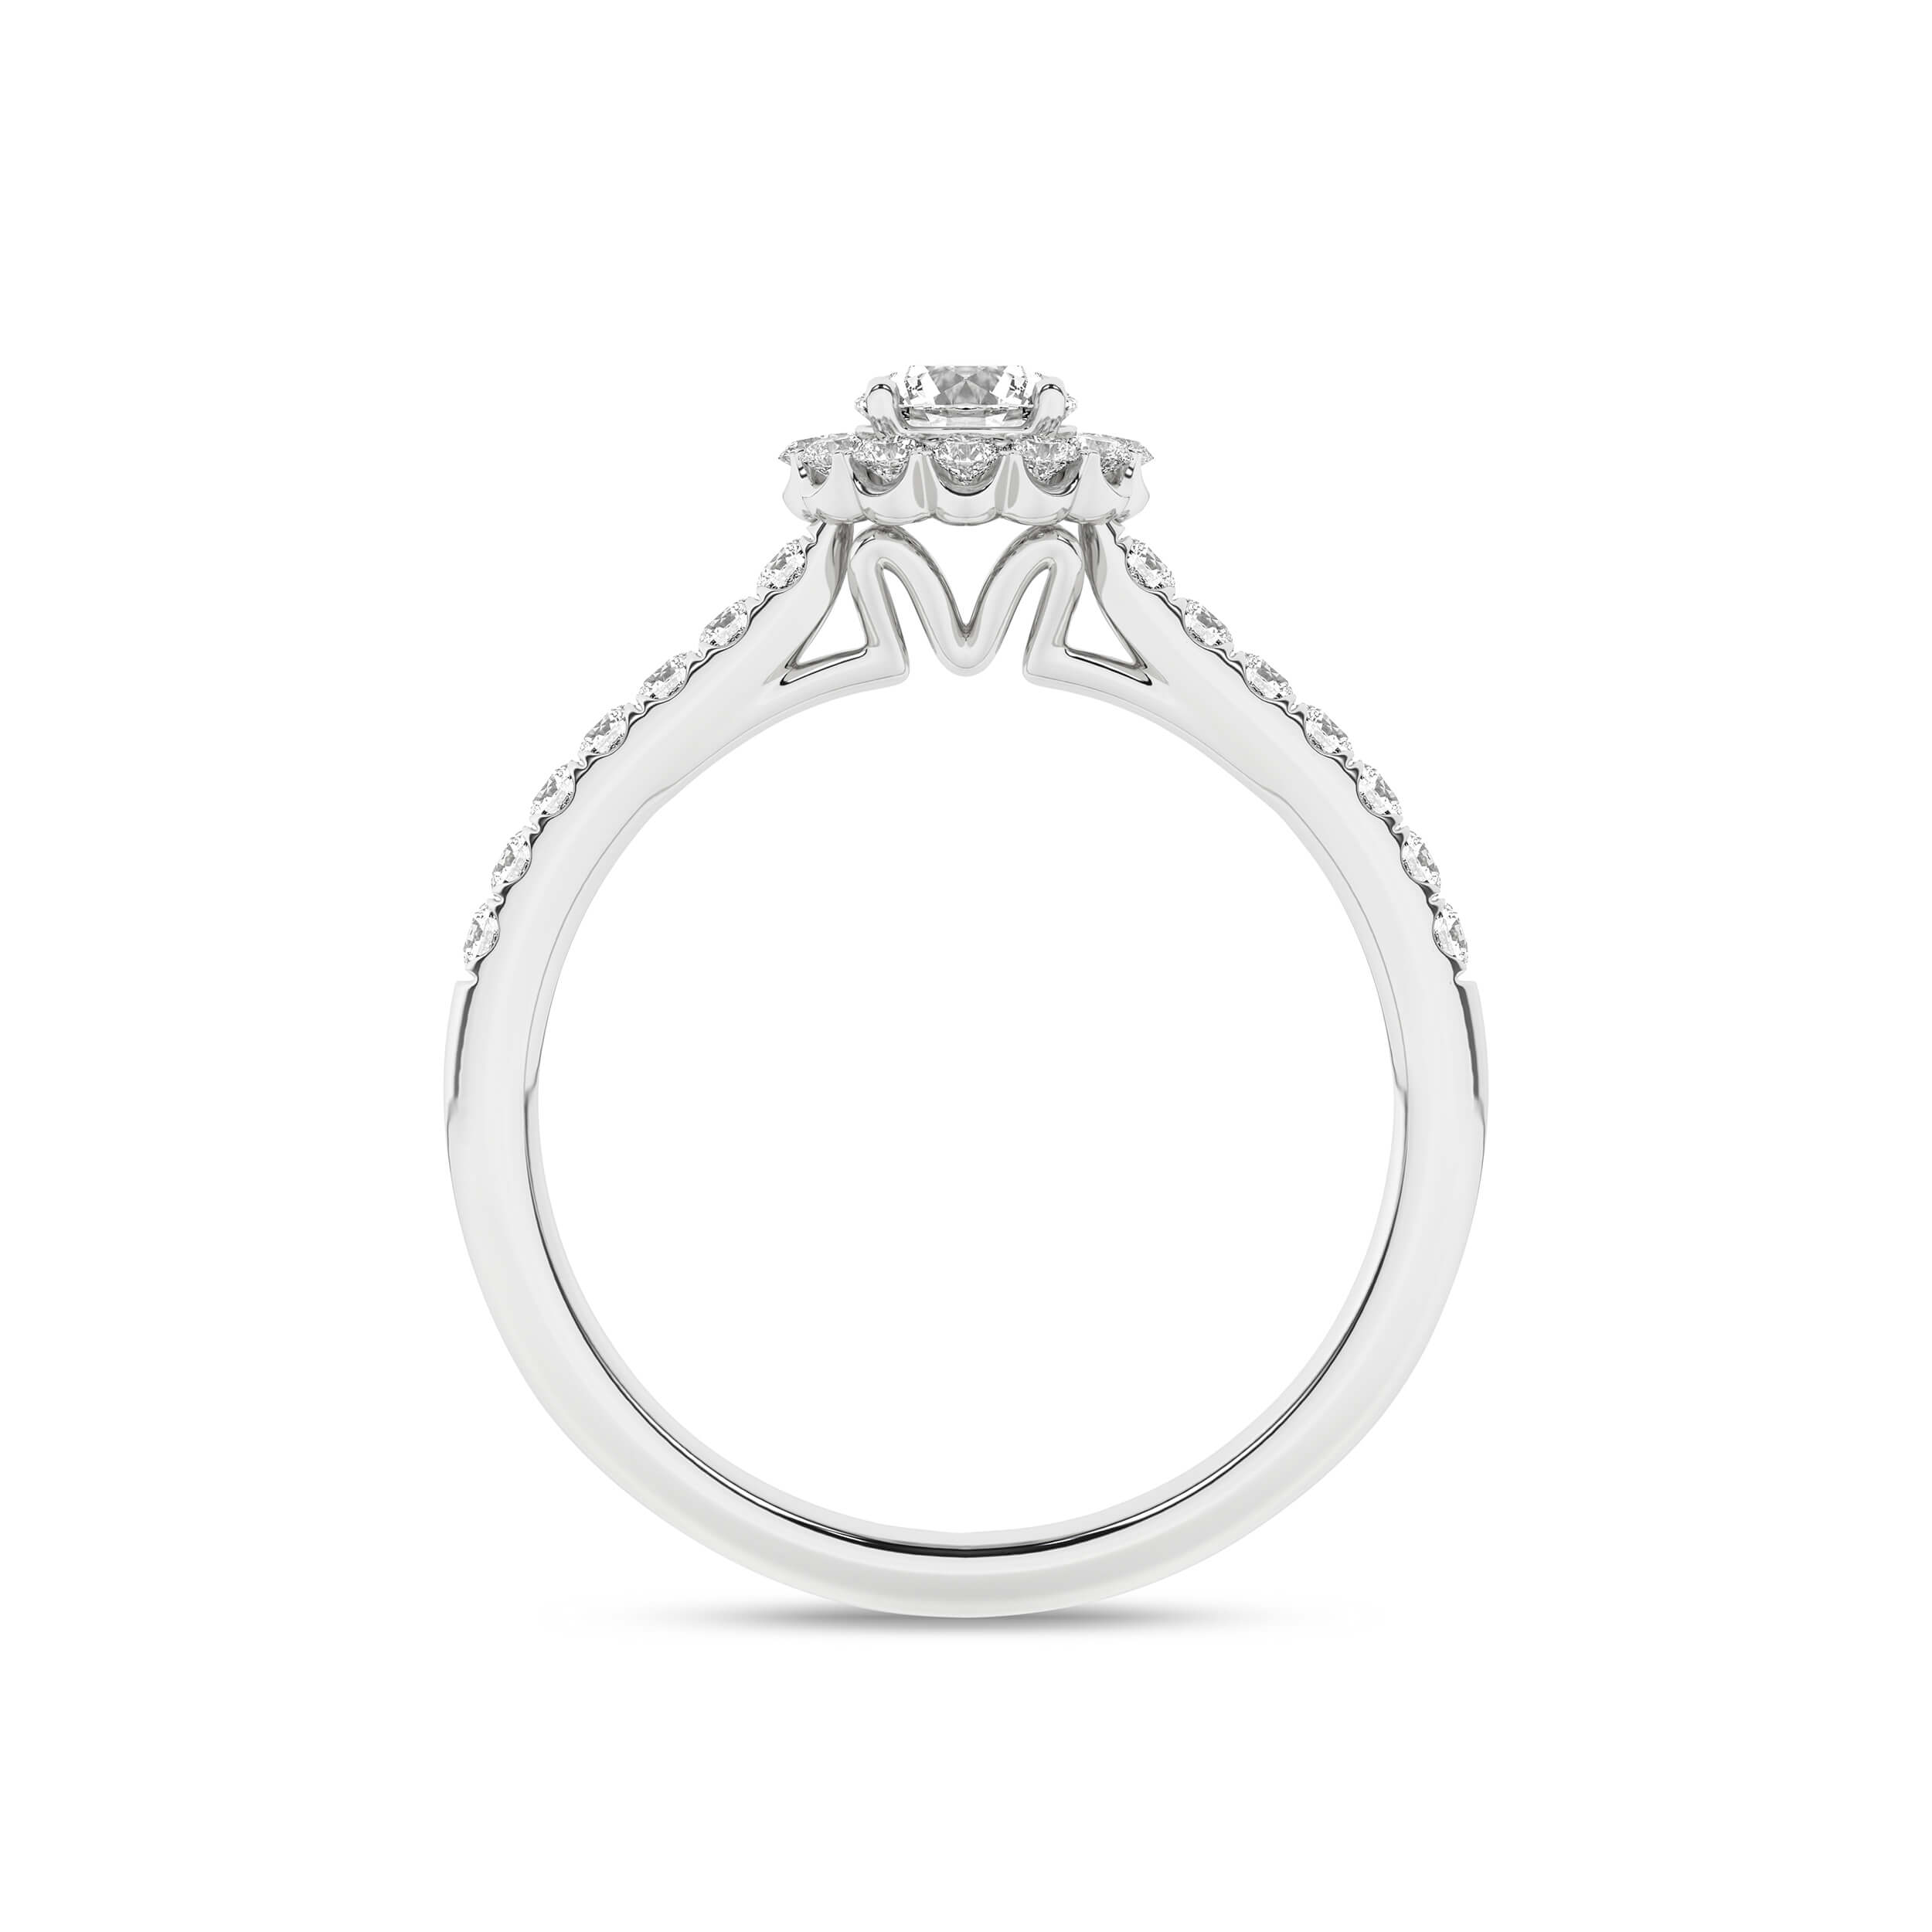 Inel de logodna din Aur Alb 18K cu Diamante 0.50Ct, articol RB17676EG, previzualizare foto 3